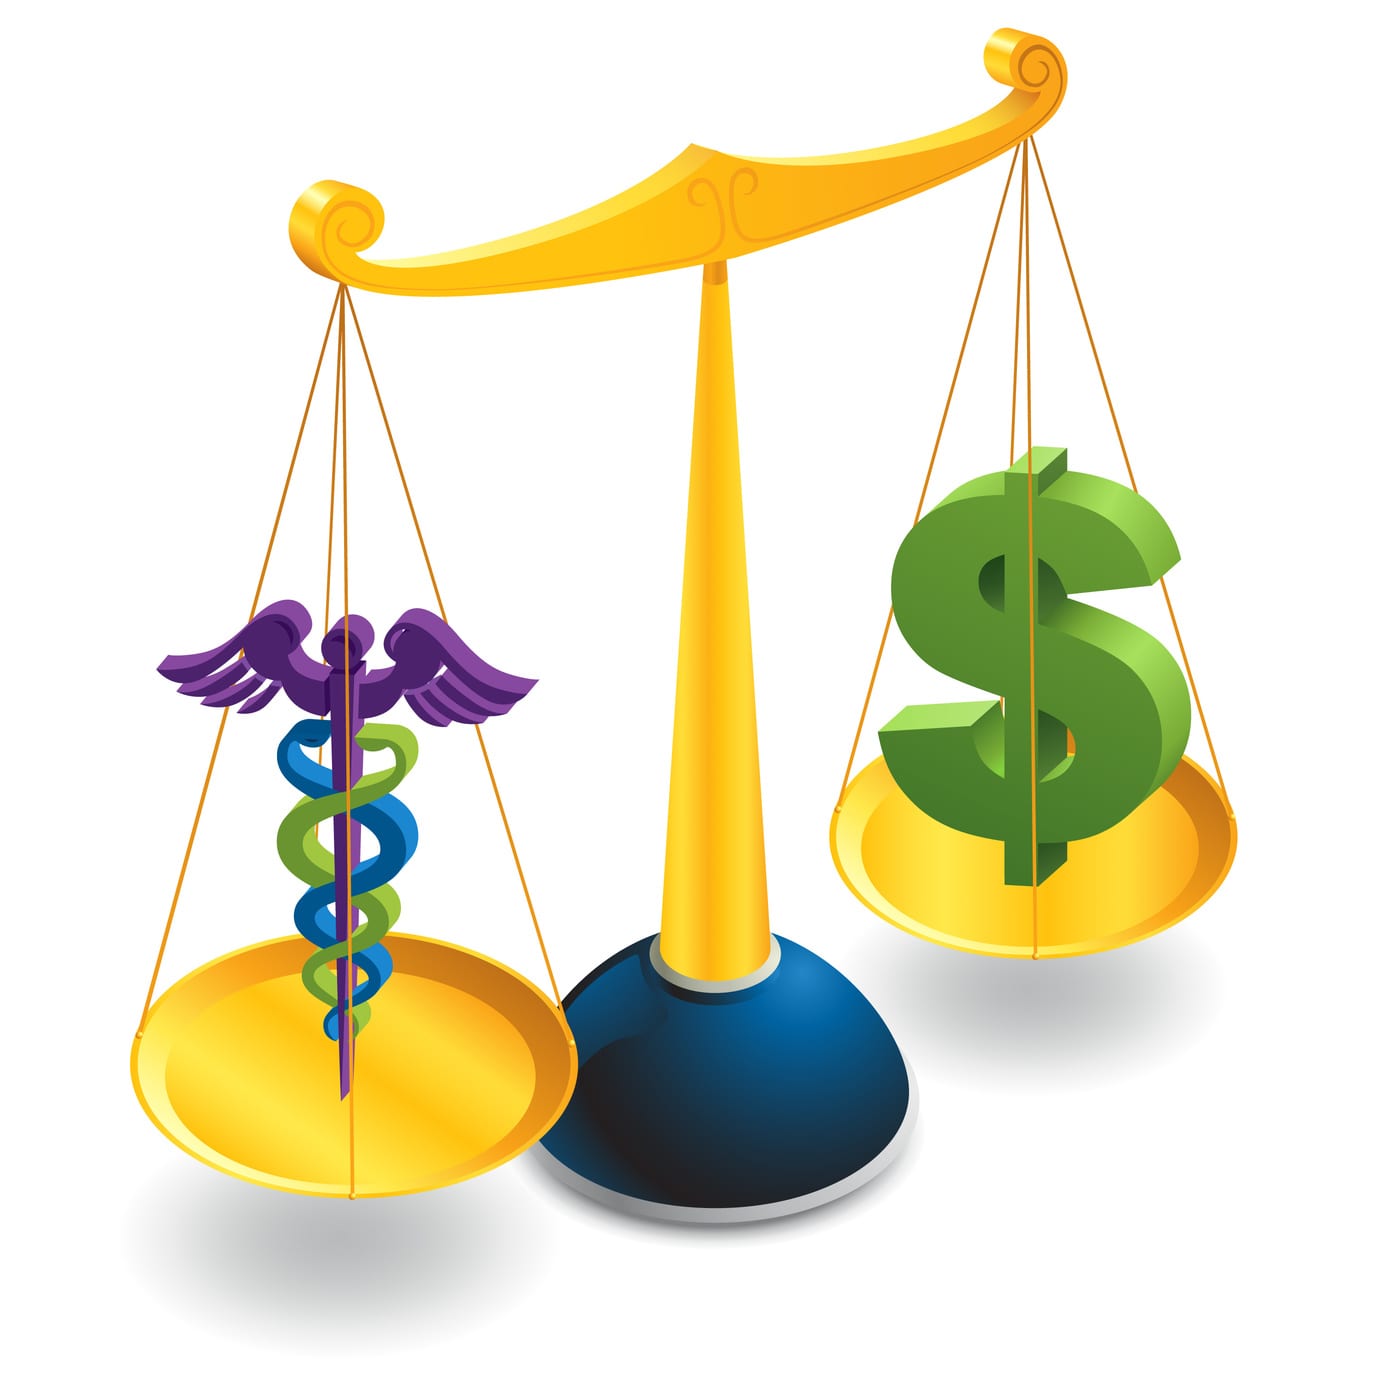 Dollar symbol balances medical symbol on scales.